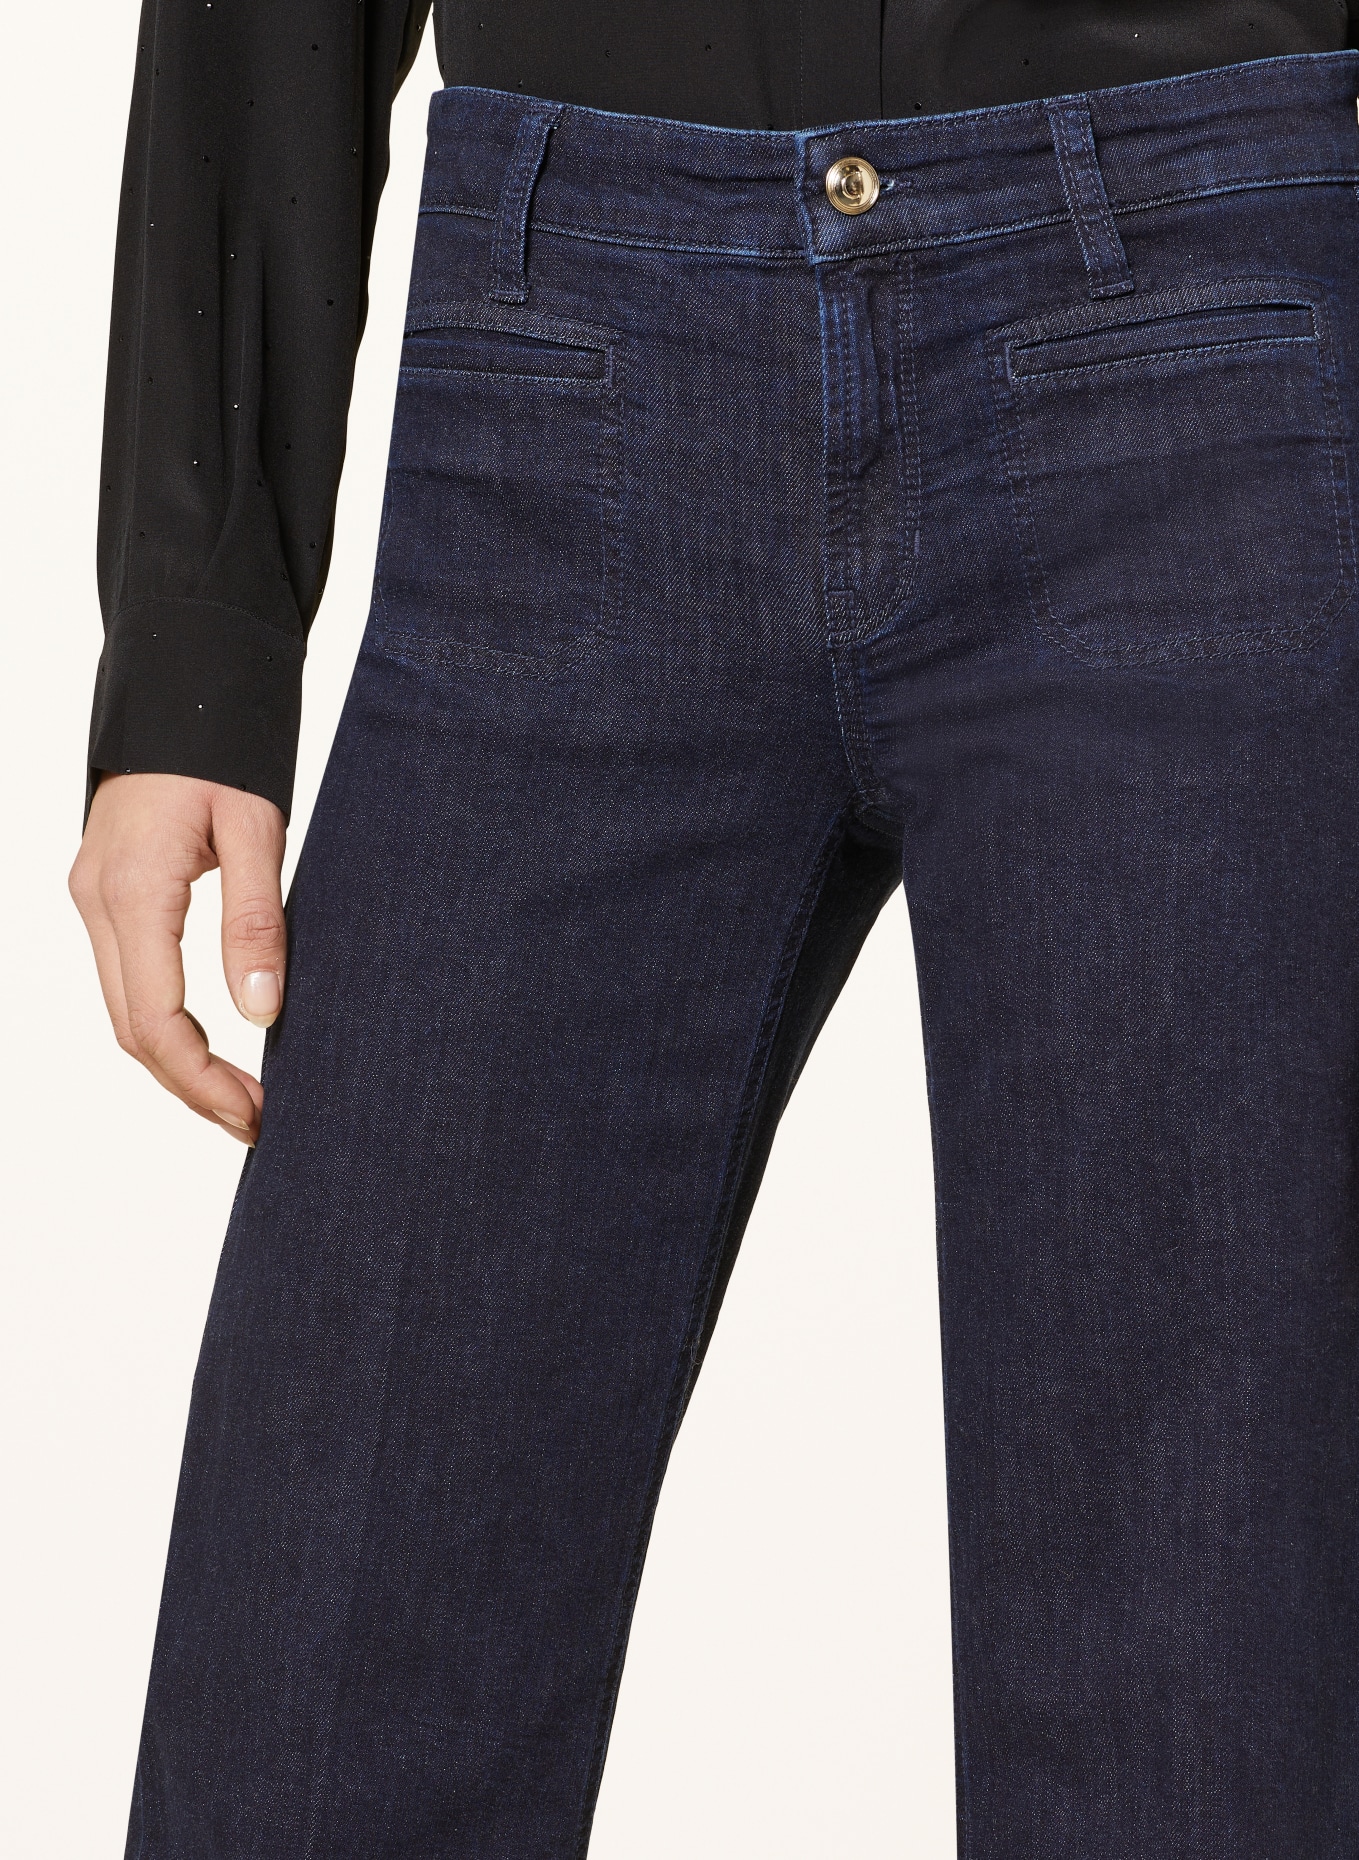 CAMBIO Jeans flared TESS, Kolor: 5006 modern rinsed (Obrazek 5)